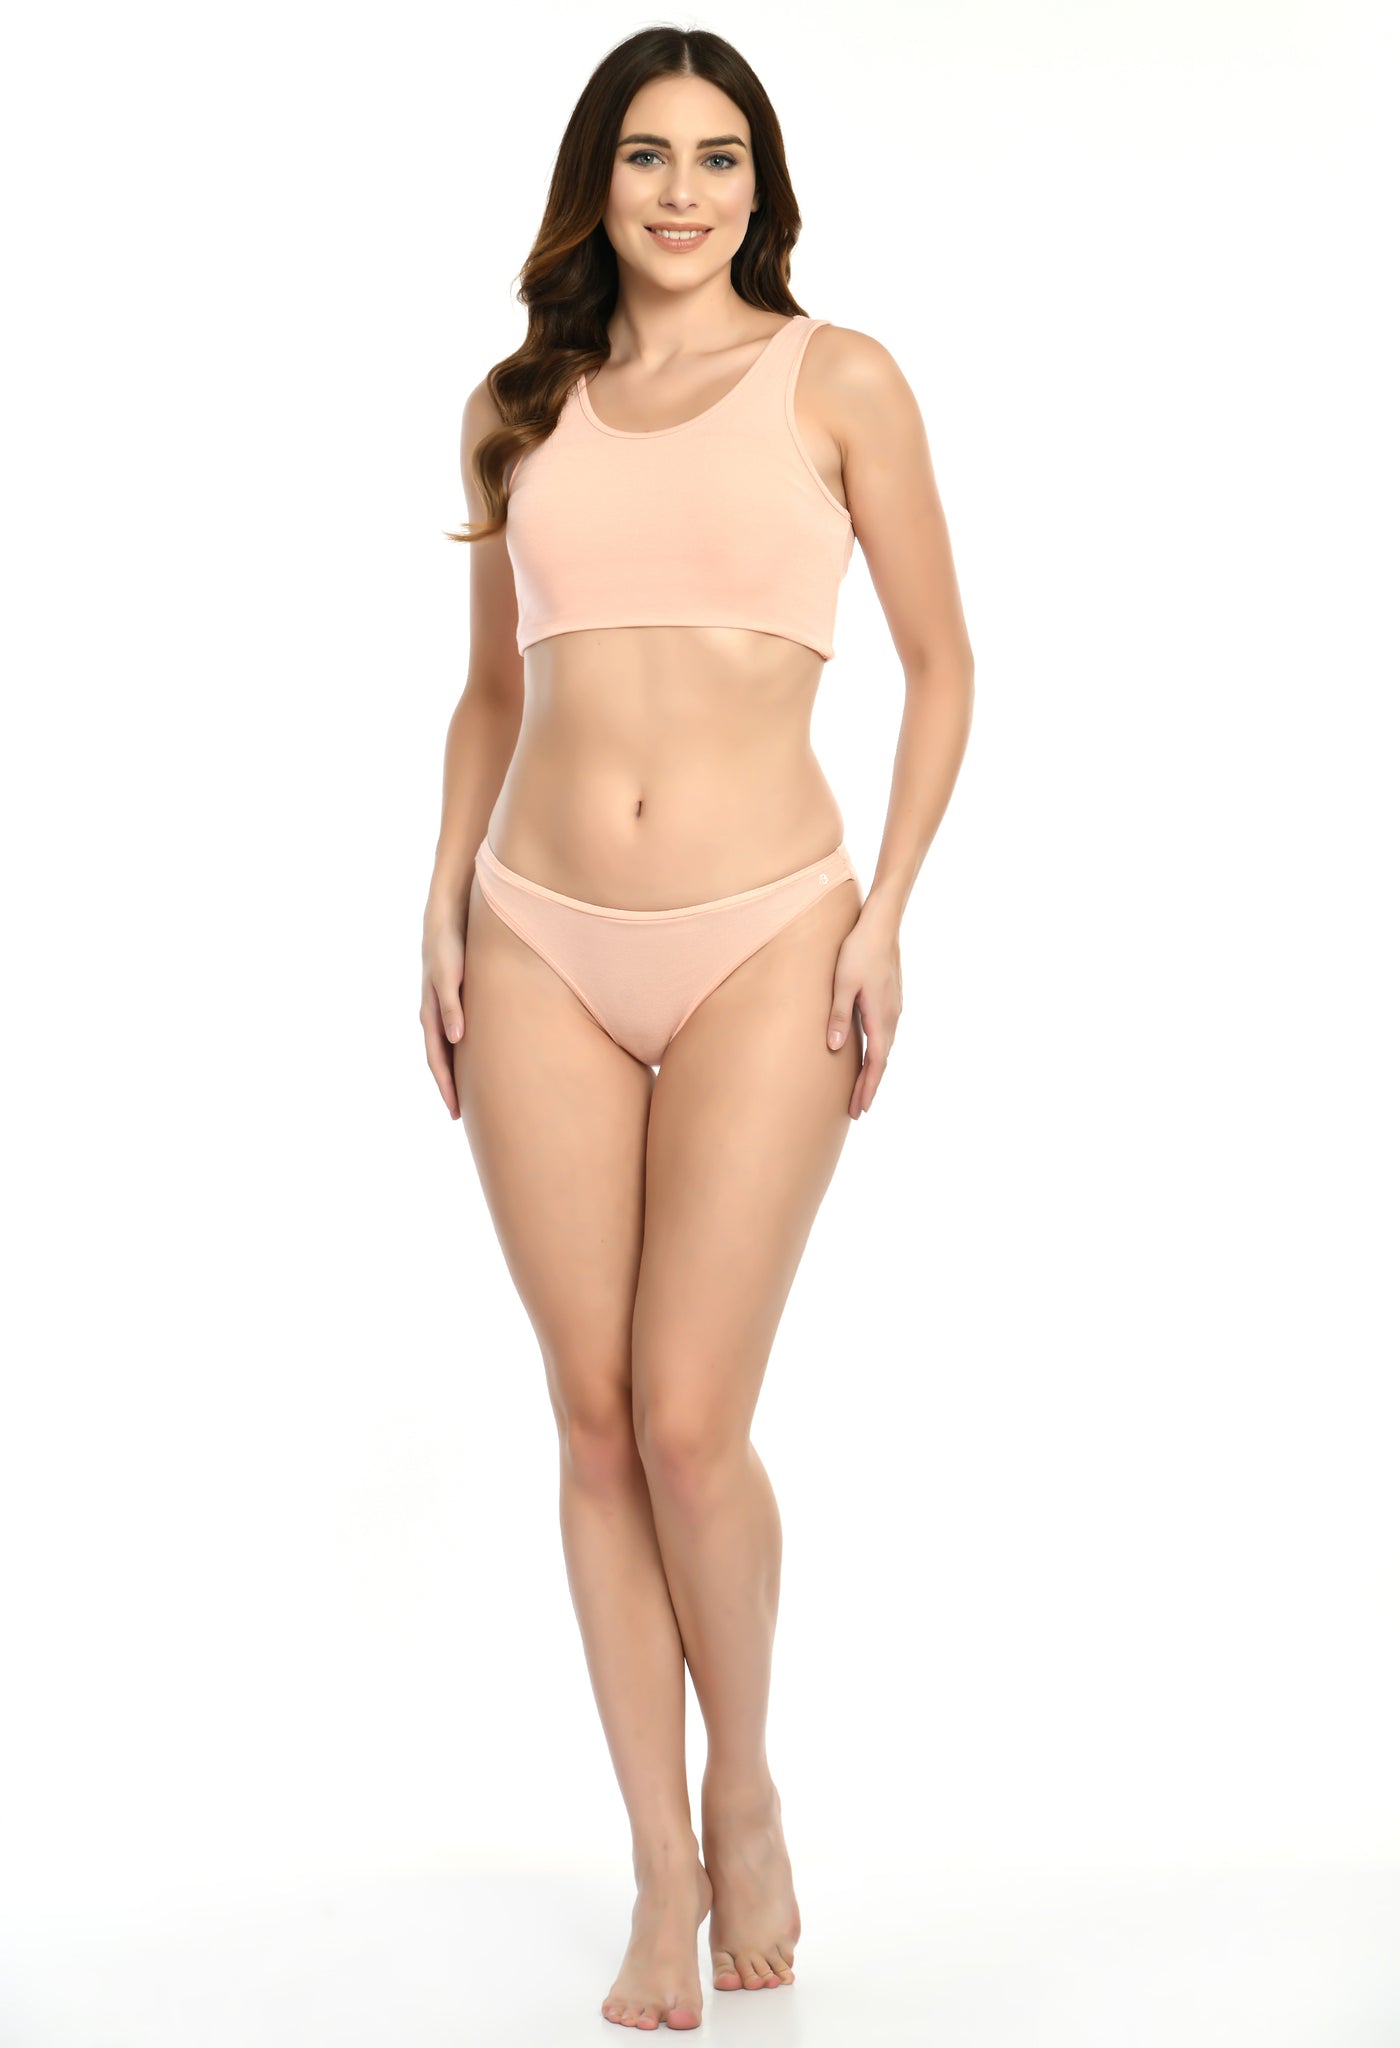 Siro Micro Modal Millennial Pink Stretchable Bikini